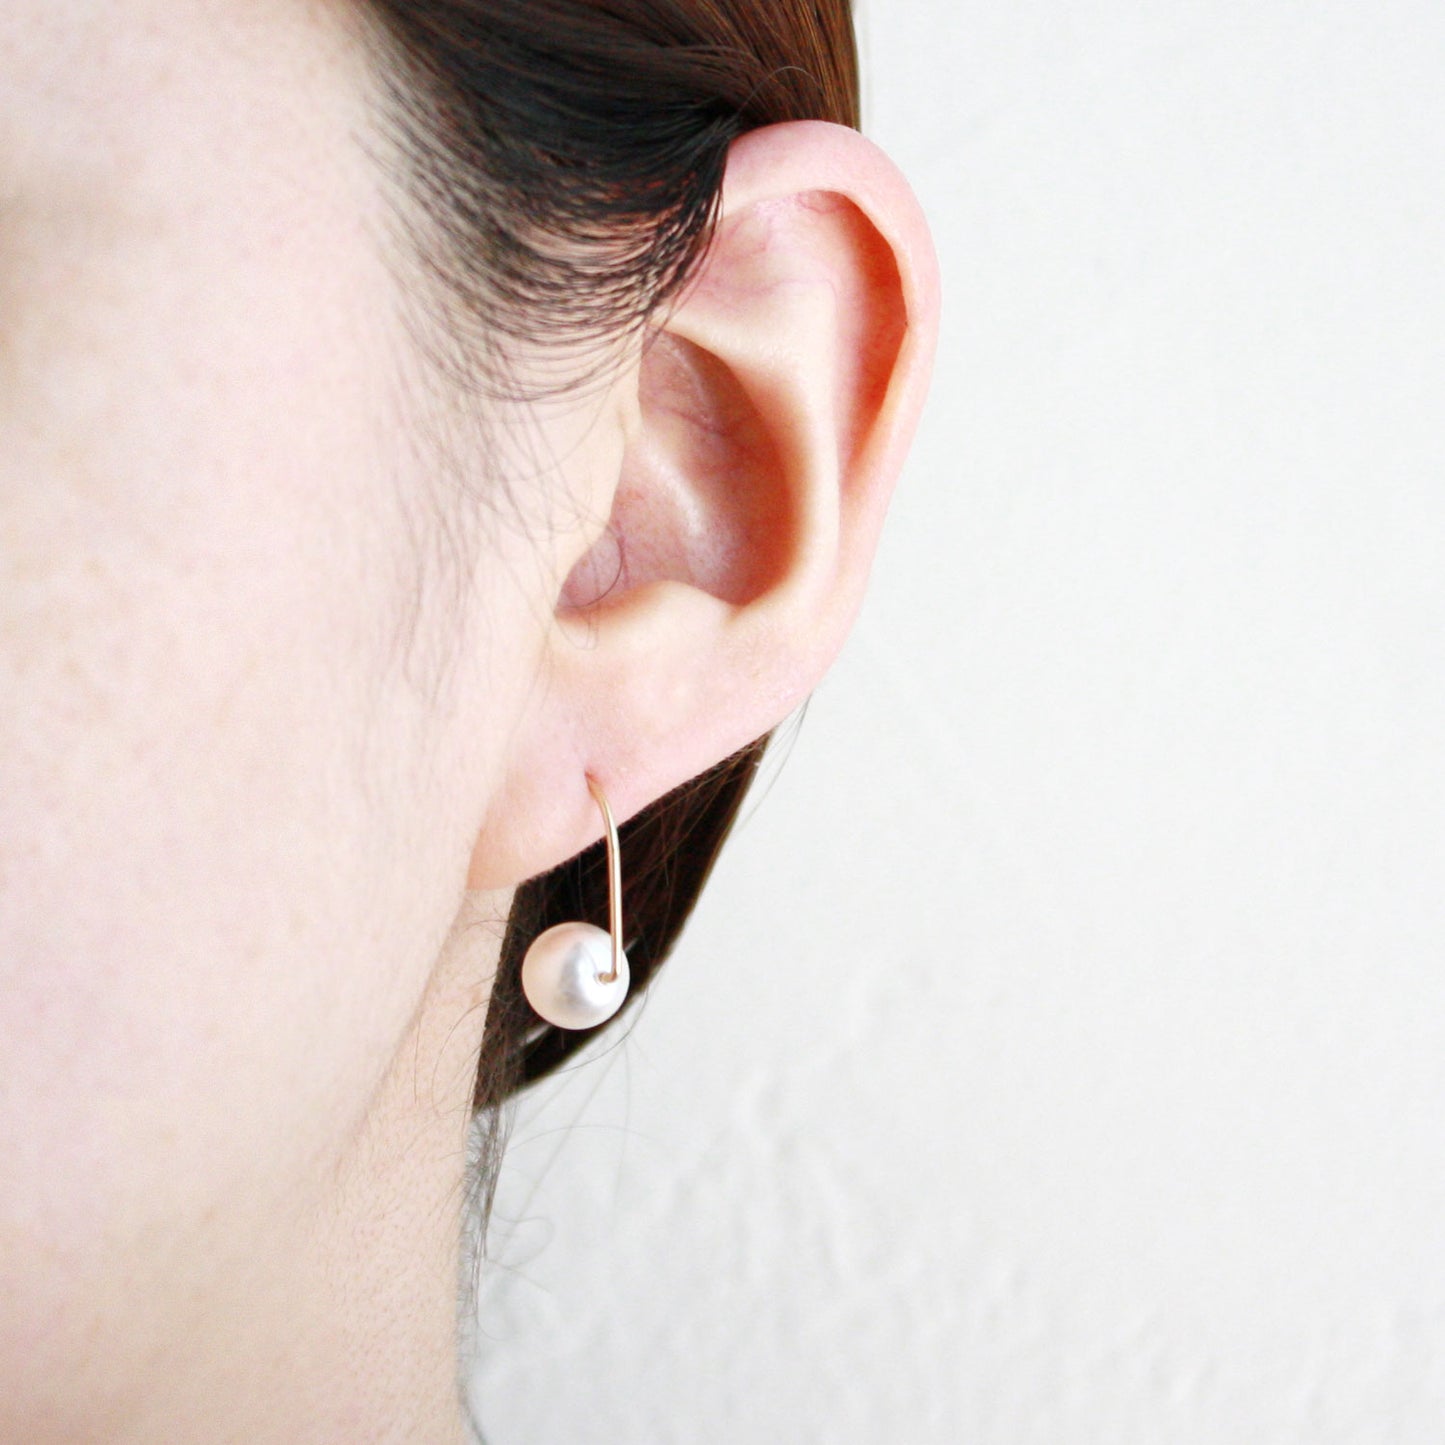 Short Hook Stud Earrings - Rose Quartz